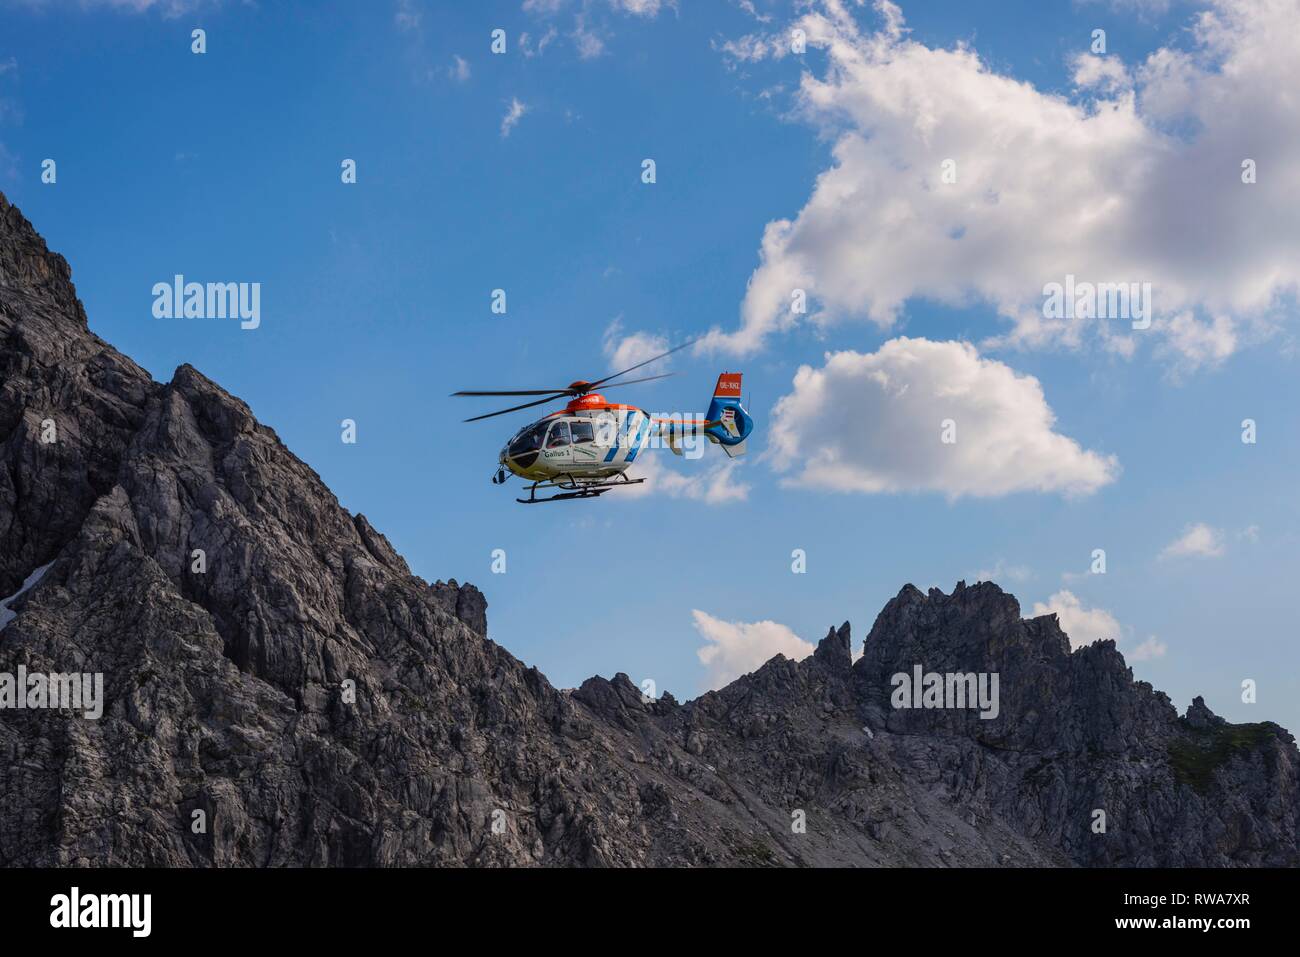 Misión de Rescate, rescate aéreo, transporte de lesionados, alpinista Wucher Helicóptero, Gallus 1, Fiderepass, Allgäu Alpes Allgäu. Foto de stock